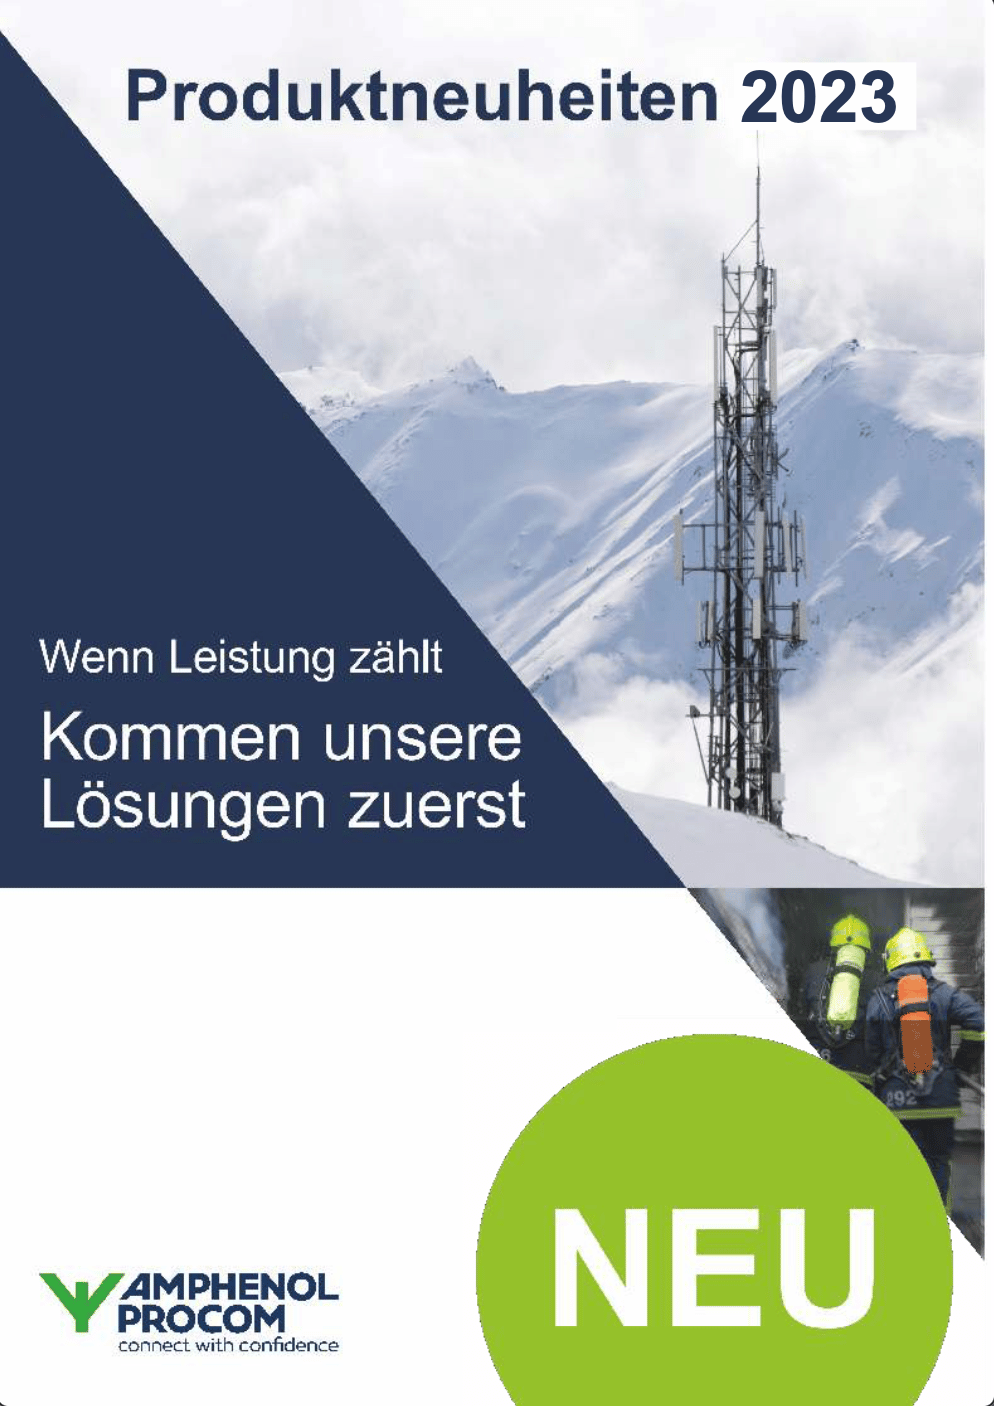 Autofunkantennen  BOS Antennen - Amphenol Procom Deutschland